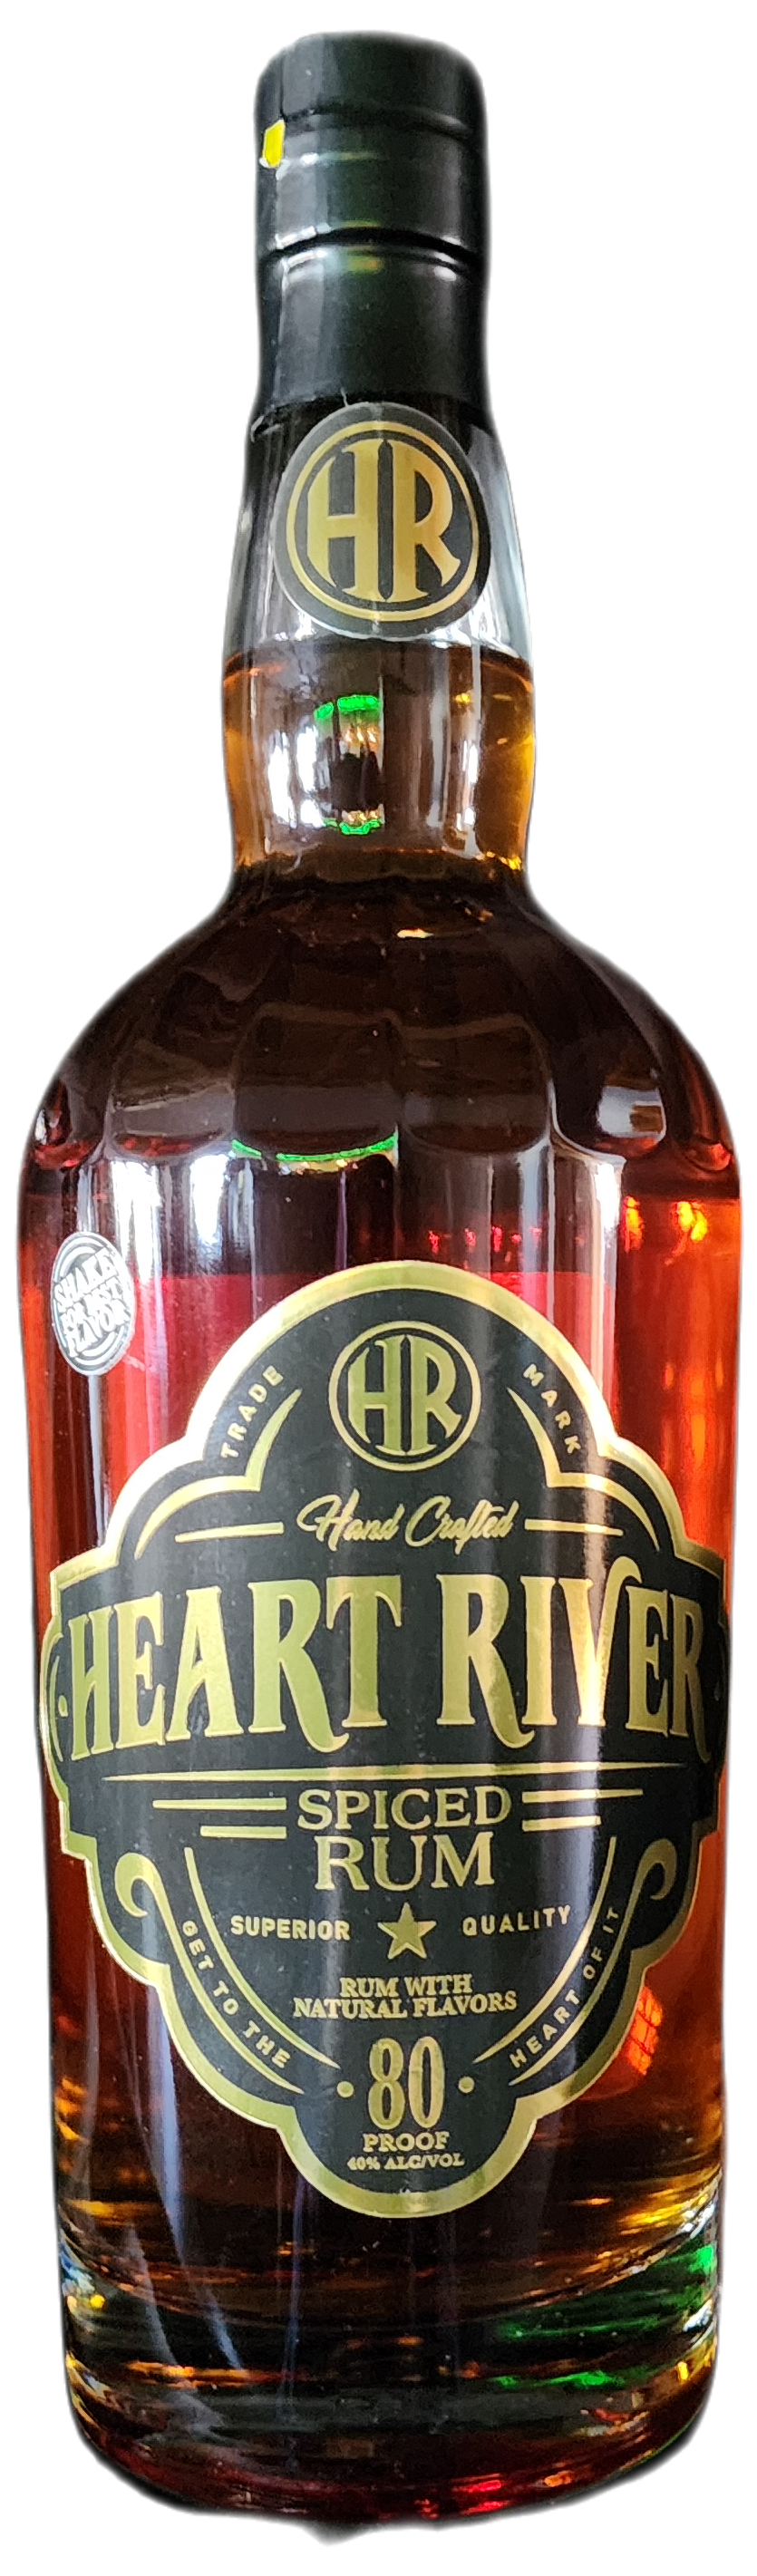 Heart River Spiced Rum